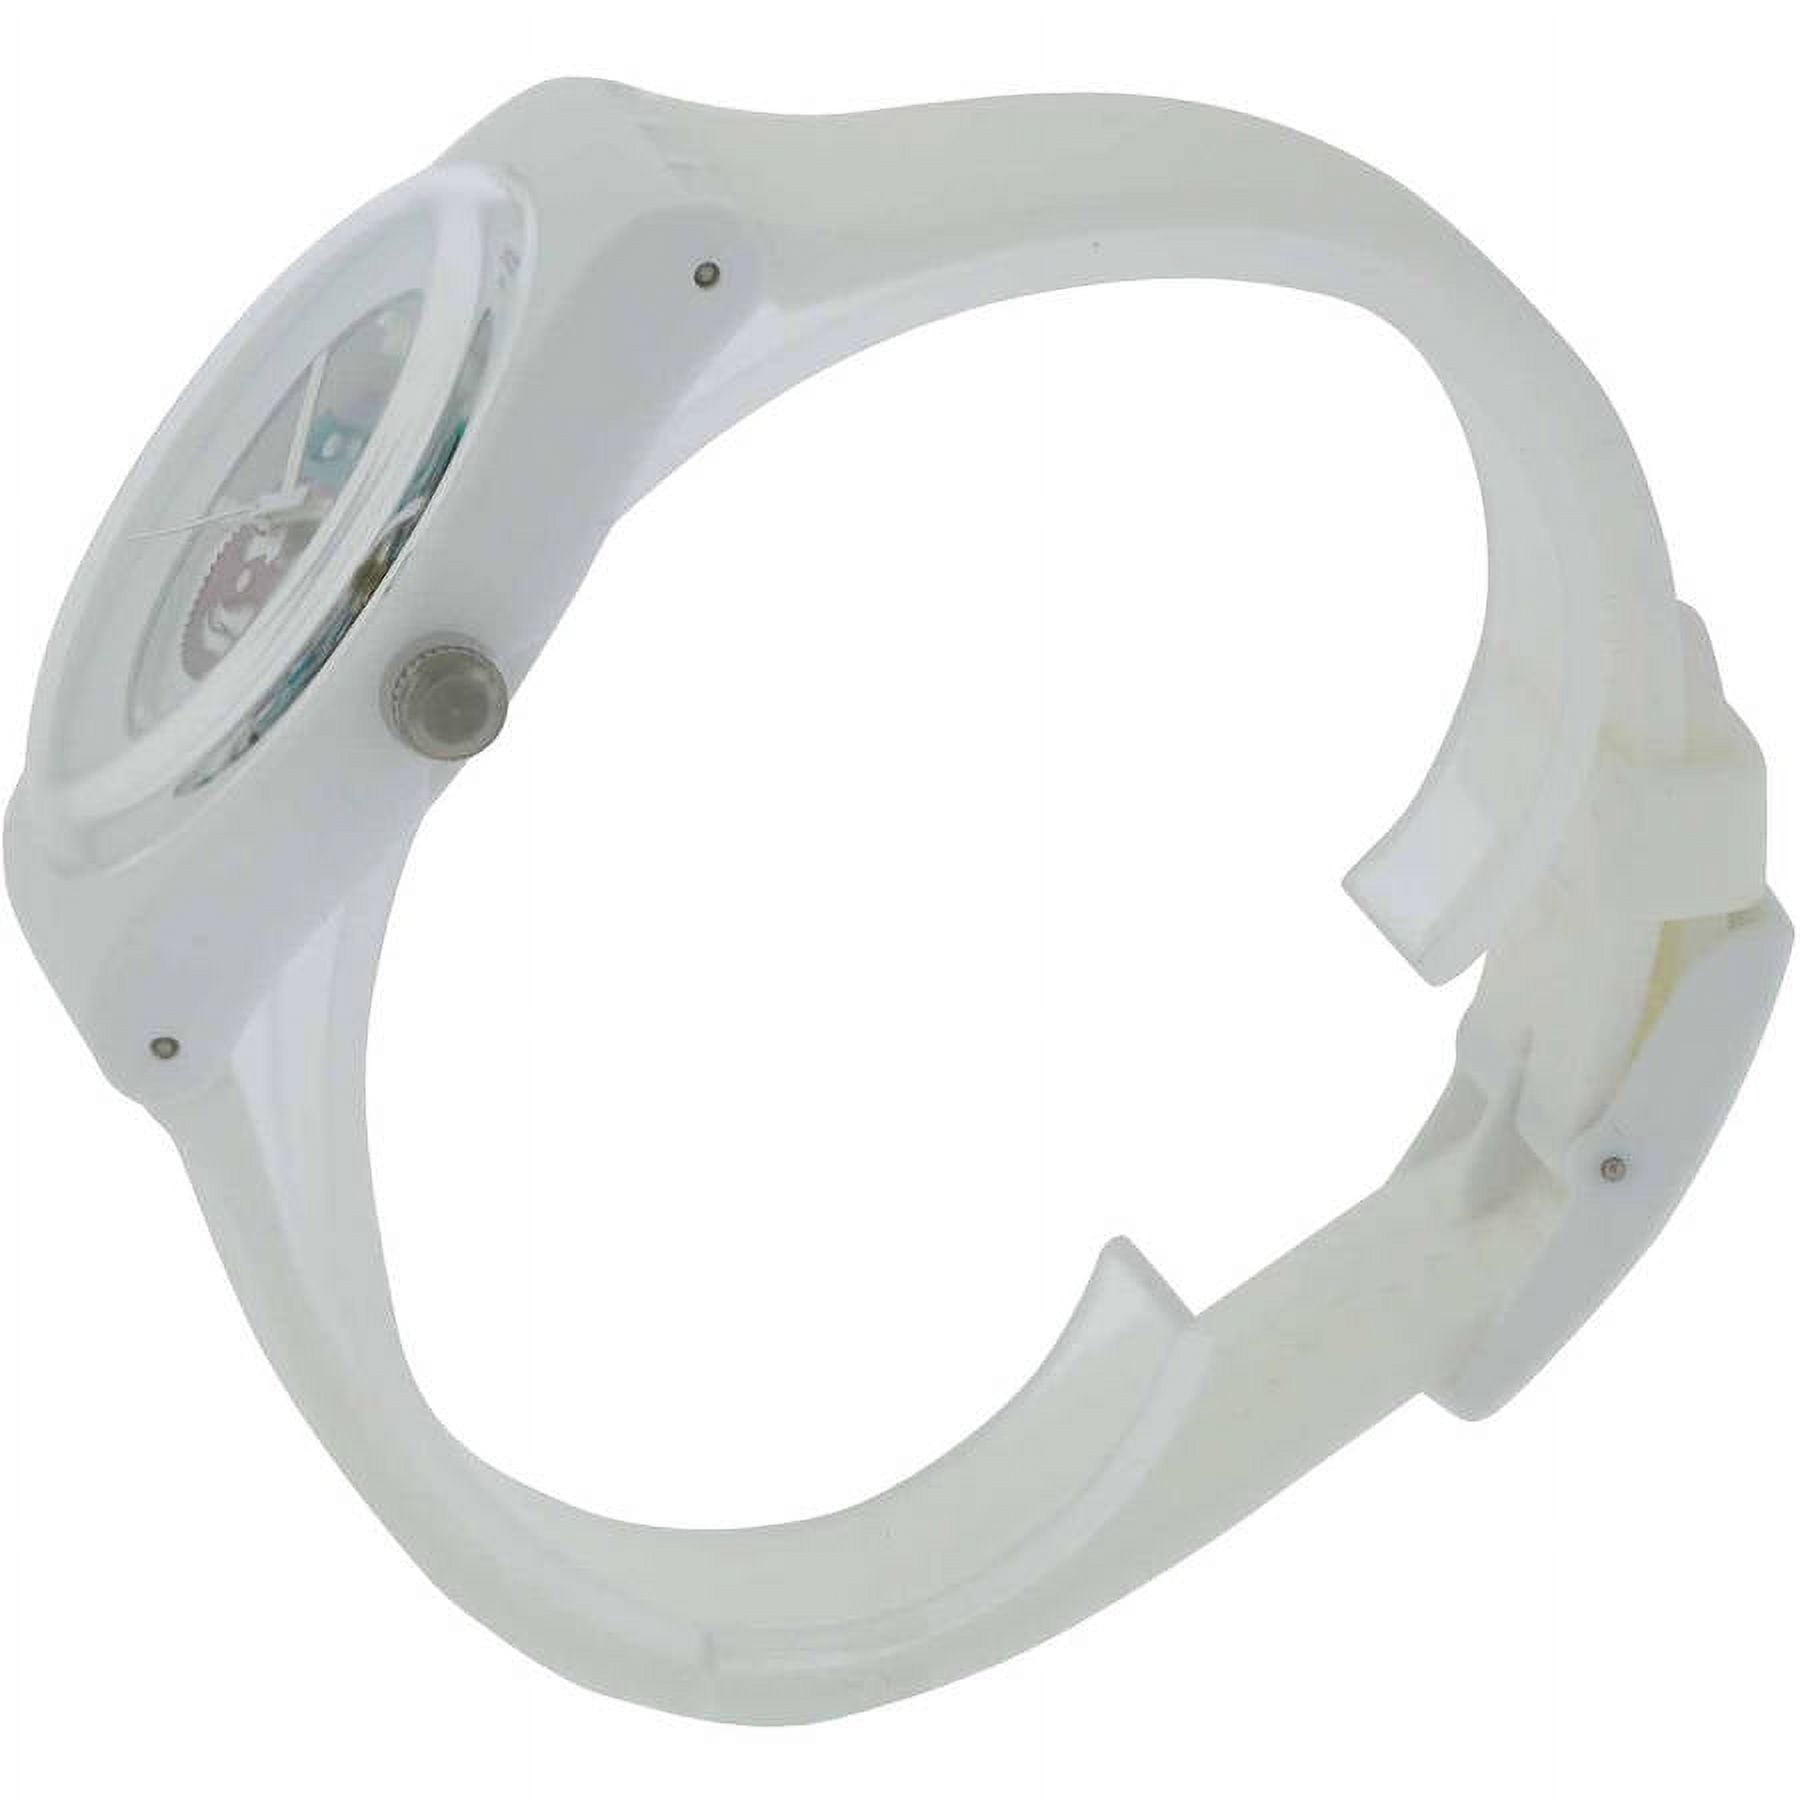 Reloj Swatch Unisex White Lacquered/SUOW100- Blanco - Compra Ahora